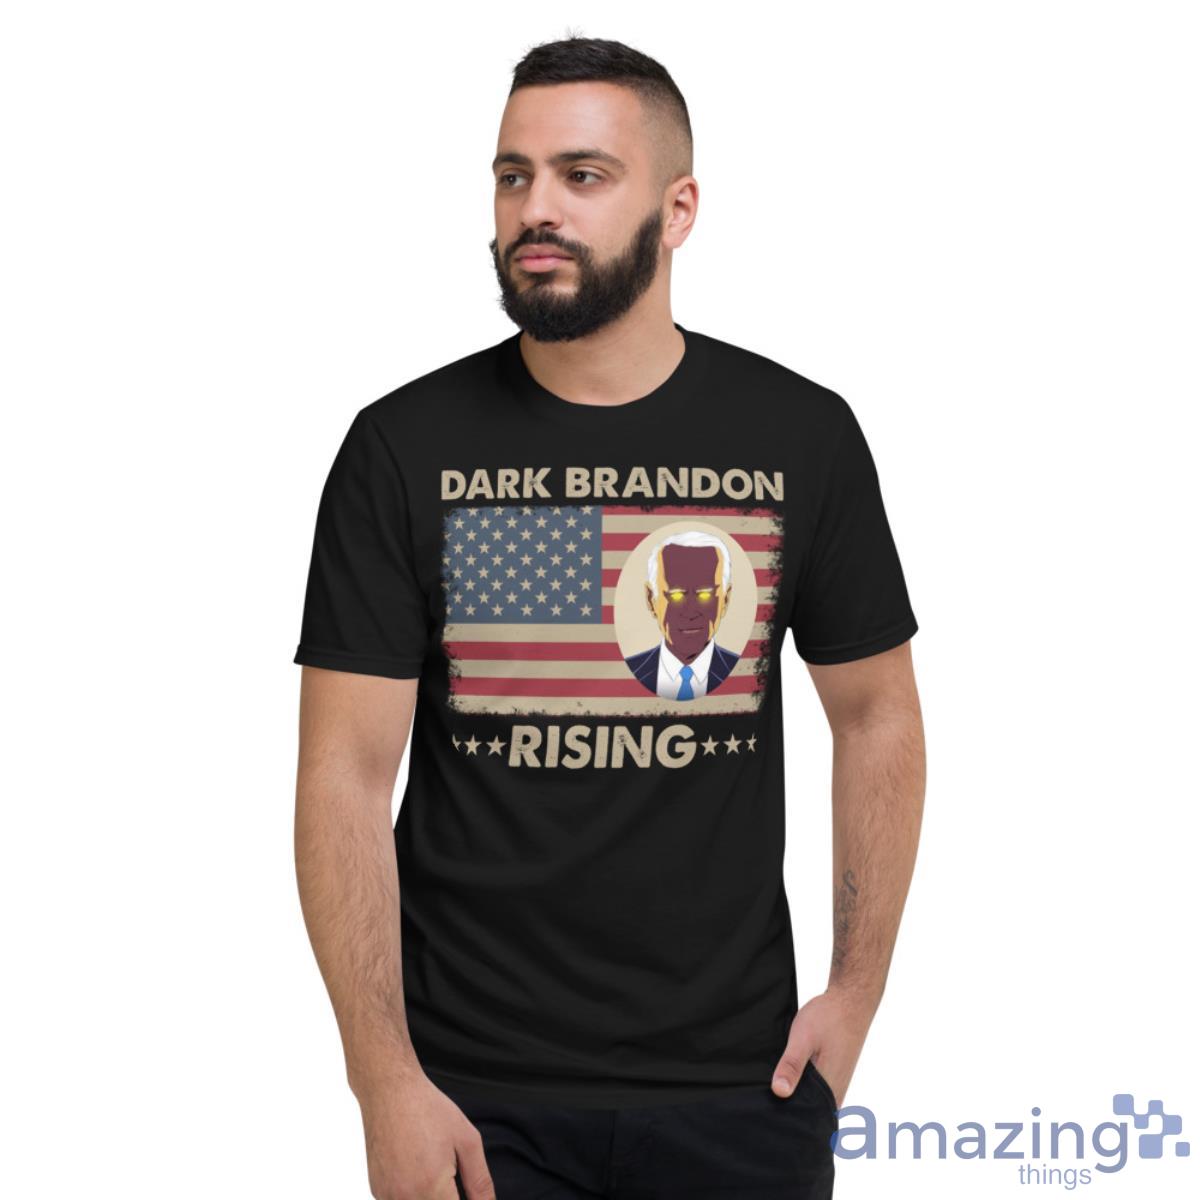 Dark Brandon Funny Joe Biden Meme Shirt - Short Sleeve T-Shirt